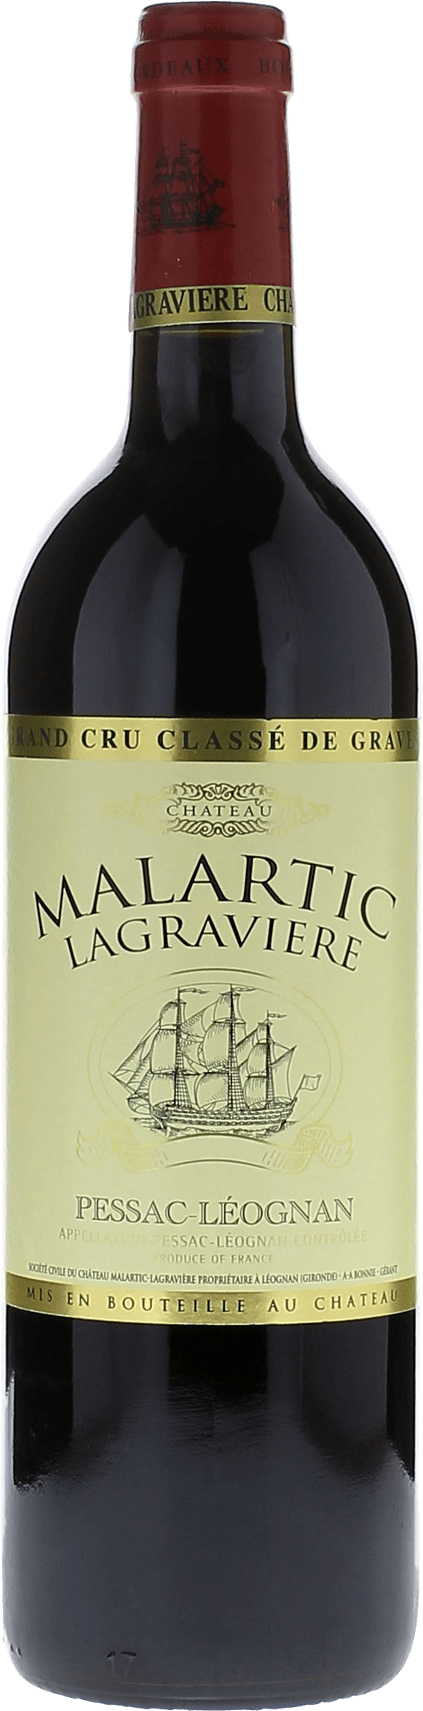 Malartic lagraviere rouge 2013 Grand Cru Class Graves, Bordeaux rouge